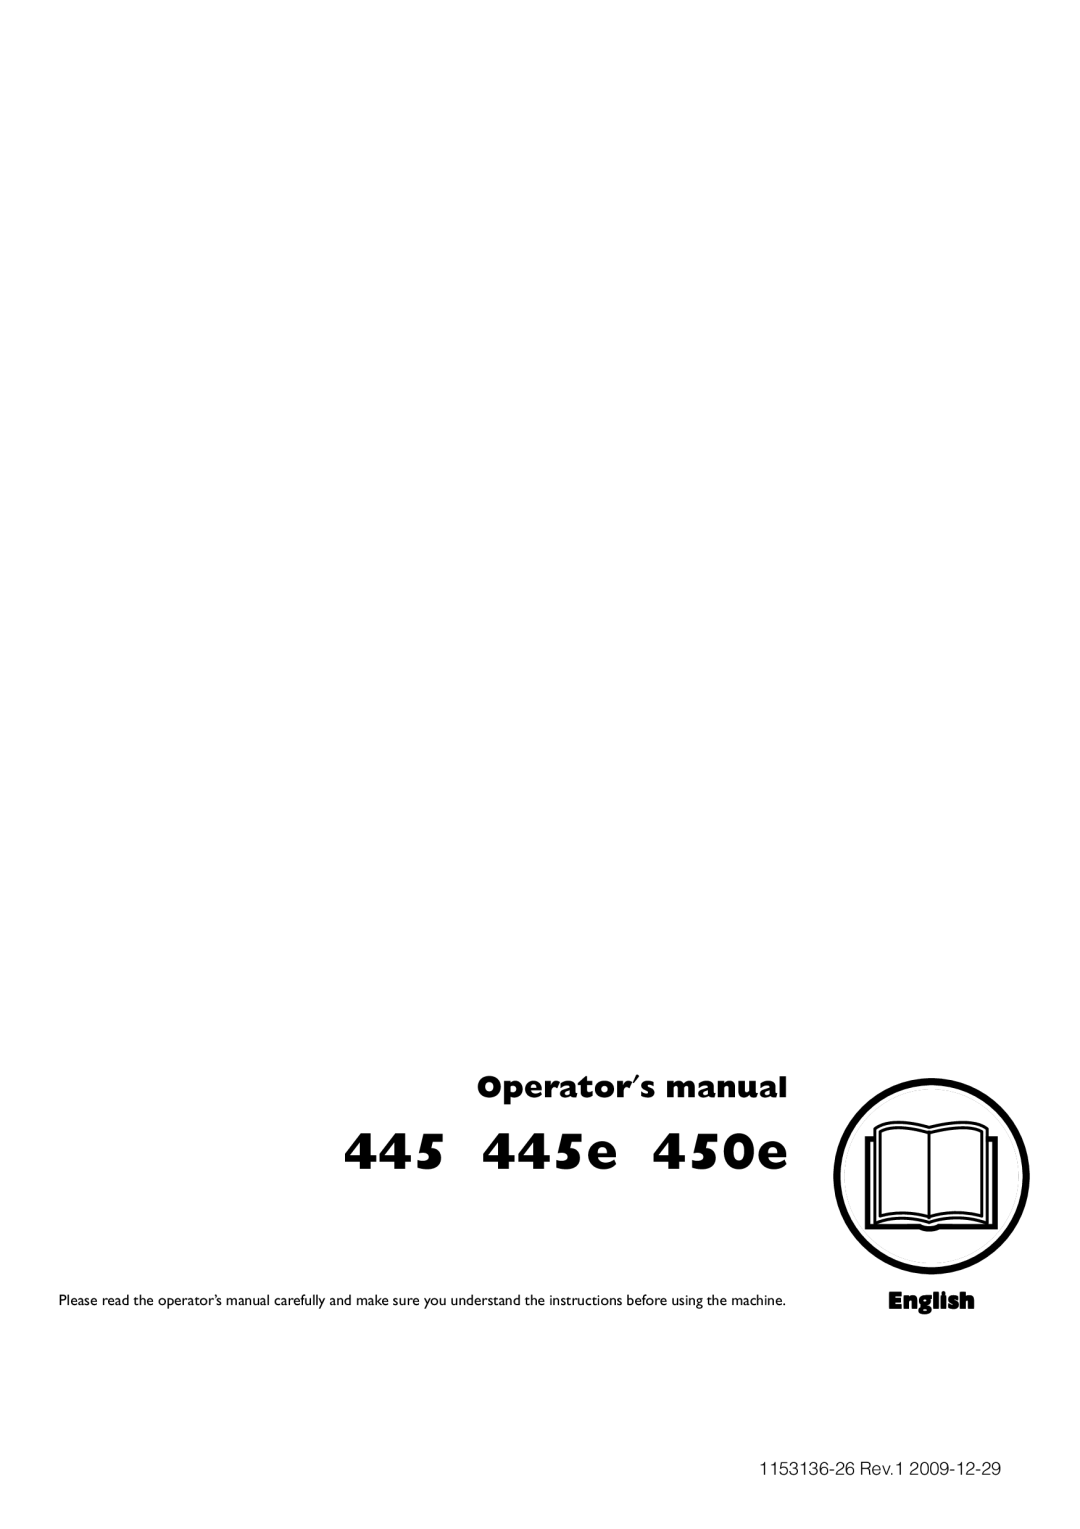 Husqvarna 1153136-26 manual English, 445 445e 450e, Operator′s manual 